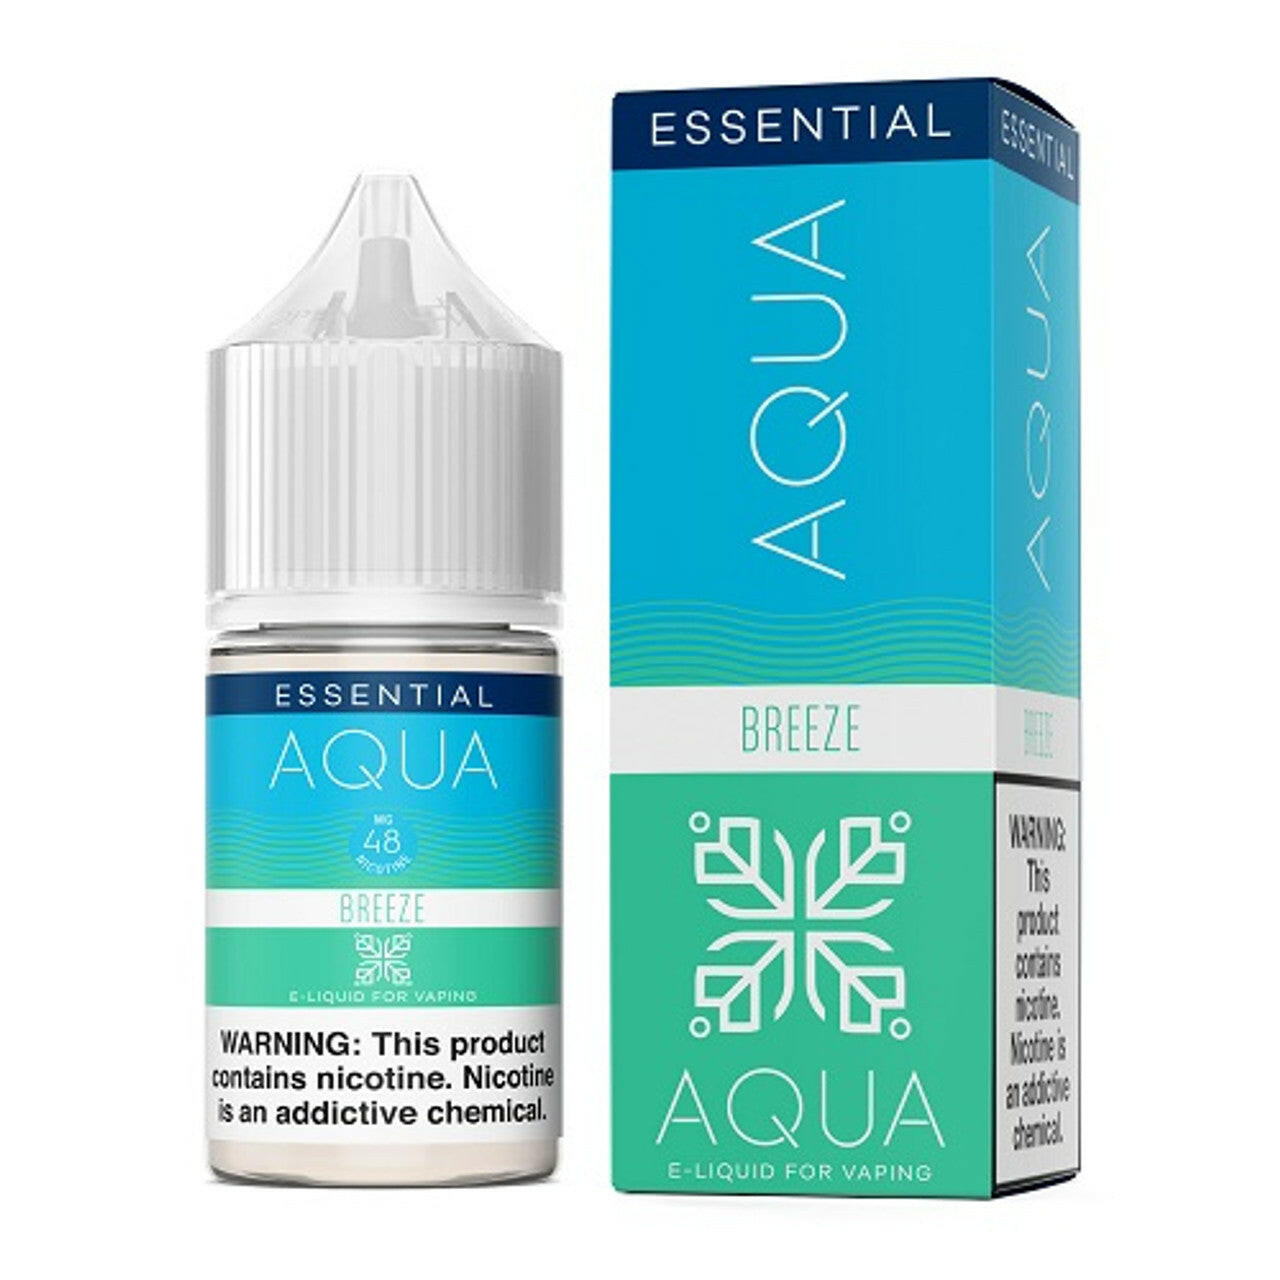 Aqua Essential Nicotine Salt E-Liquid By Marina Vape 30ML Breeze 